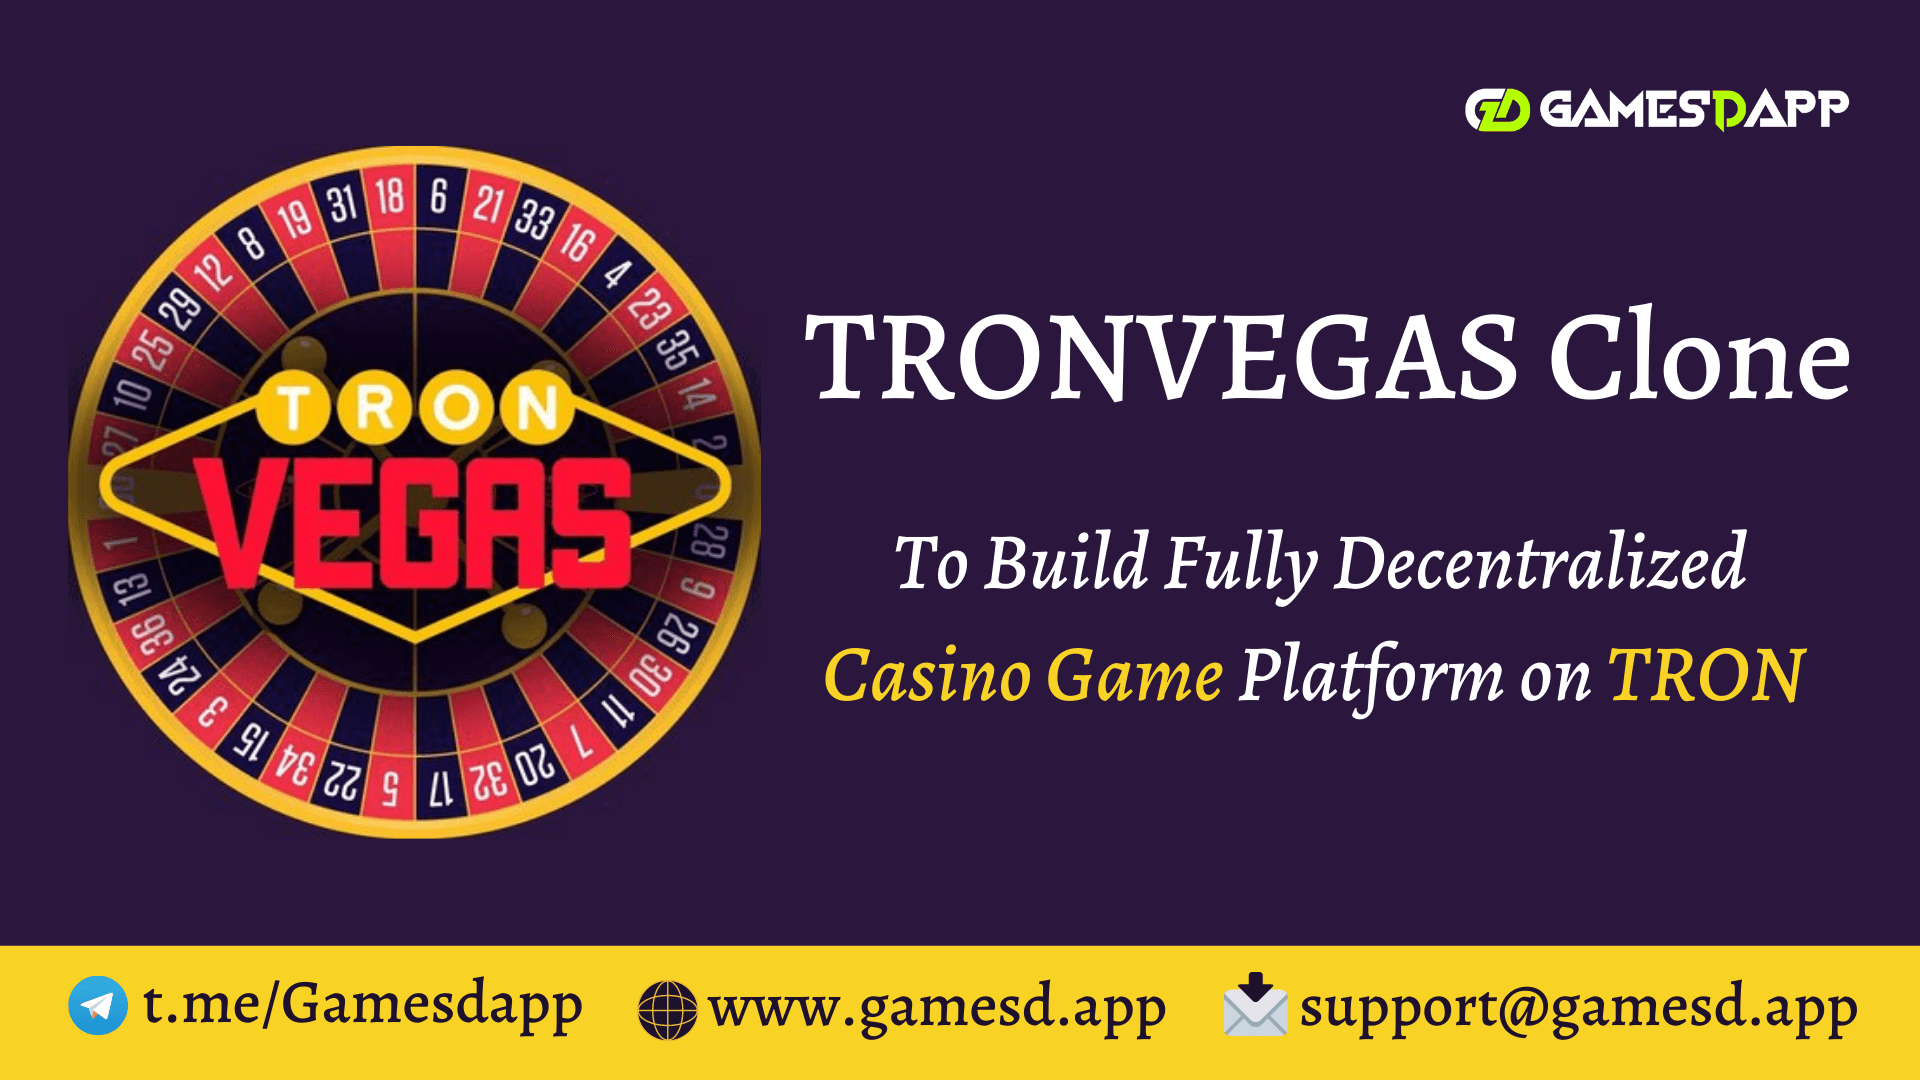 TRONVegas Clone - To Create Fully Decentralized Casino Game Platform on TRON Blockchain